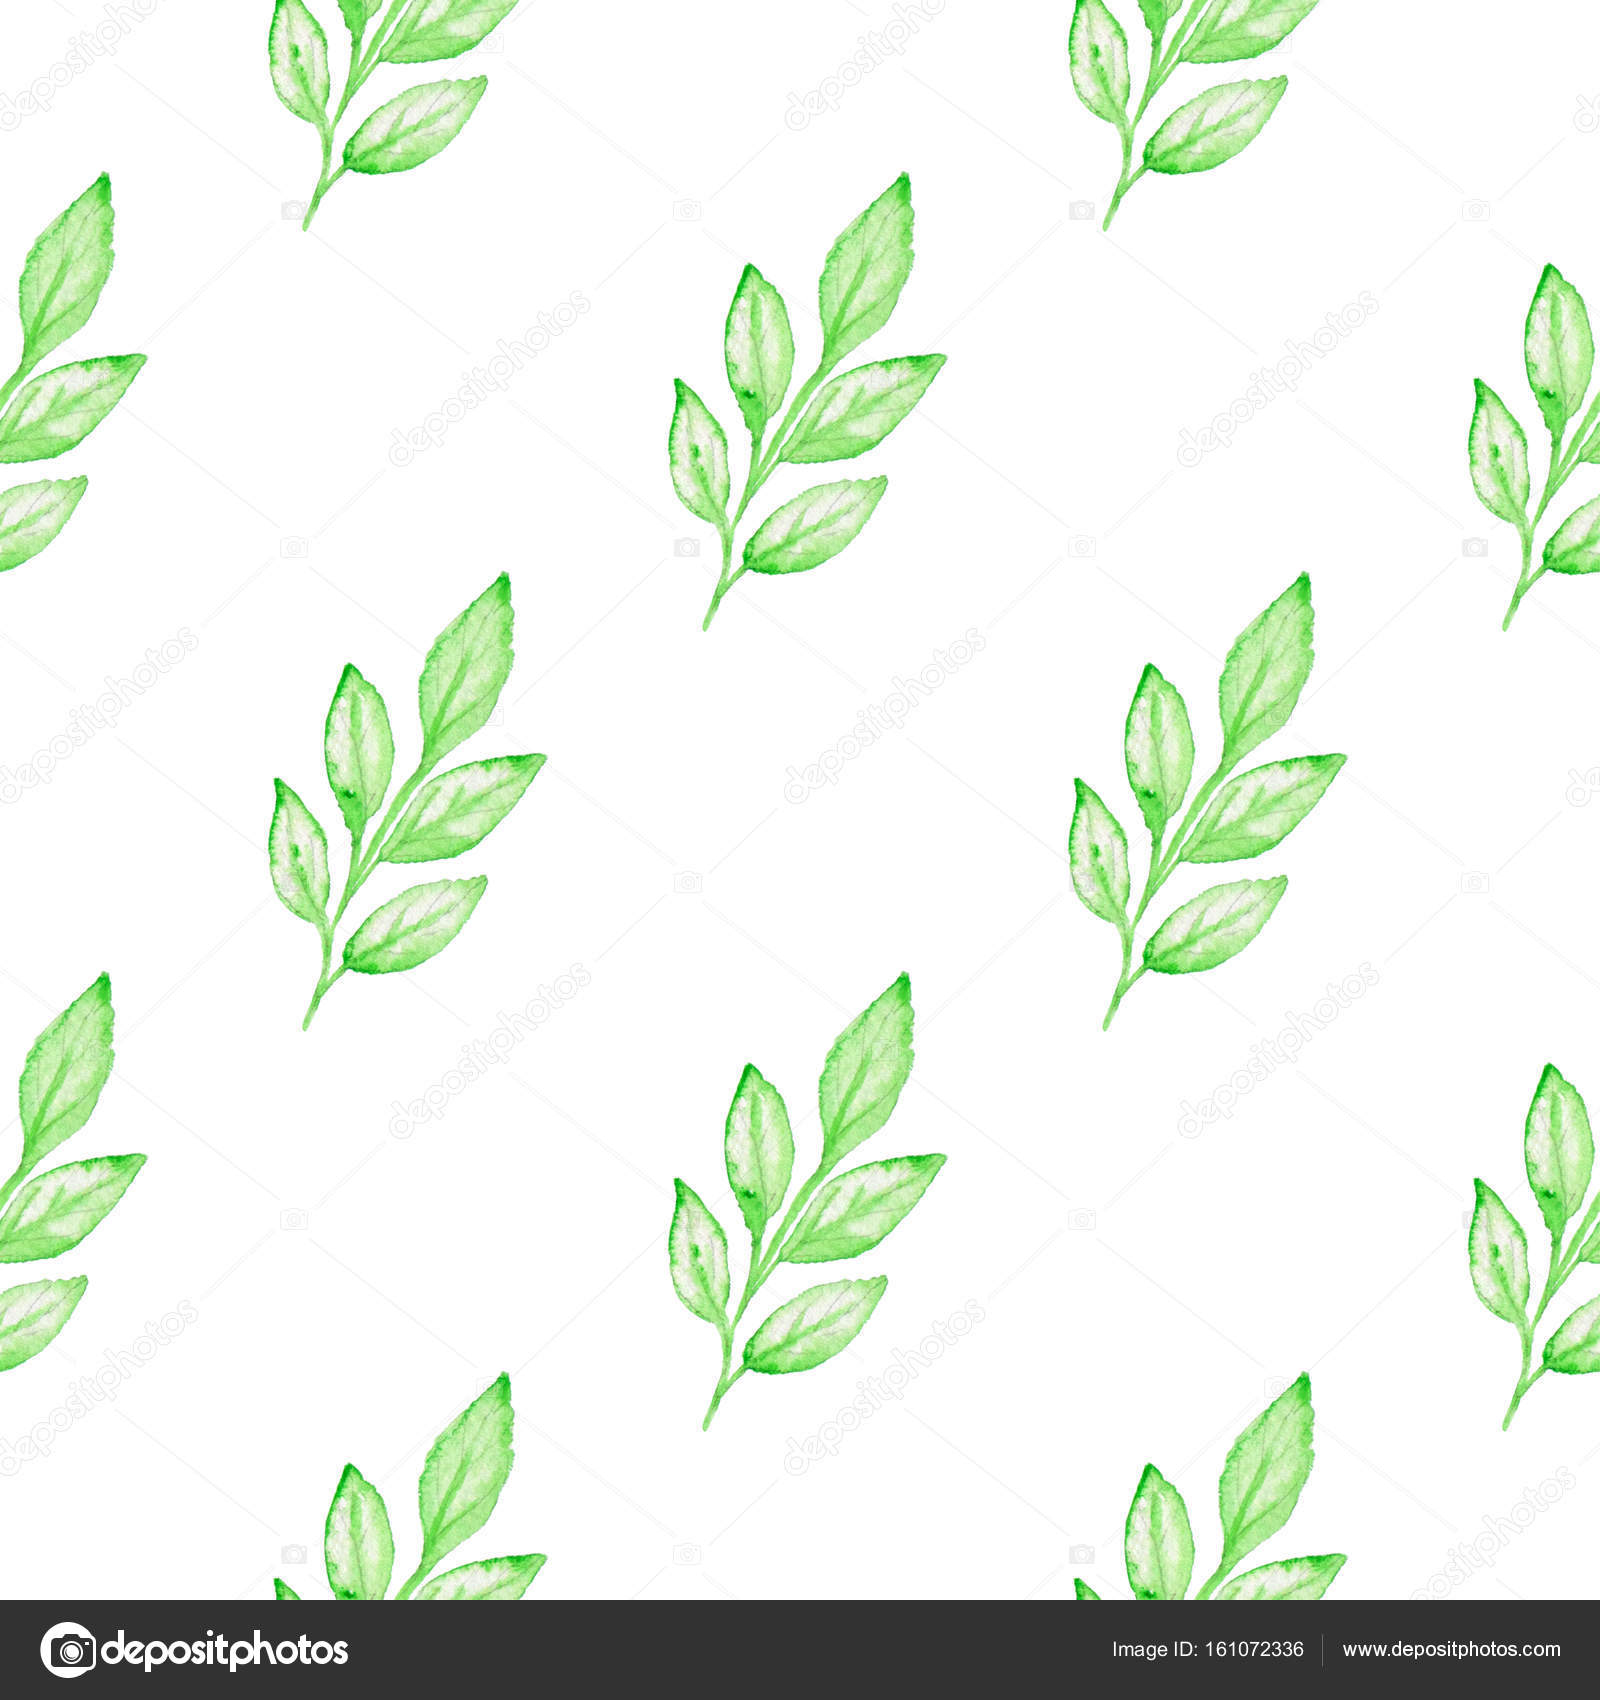 Pattern with green branch — Stock Photo © Artness #161072336